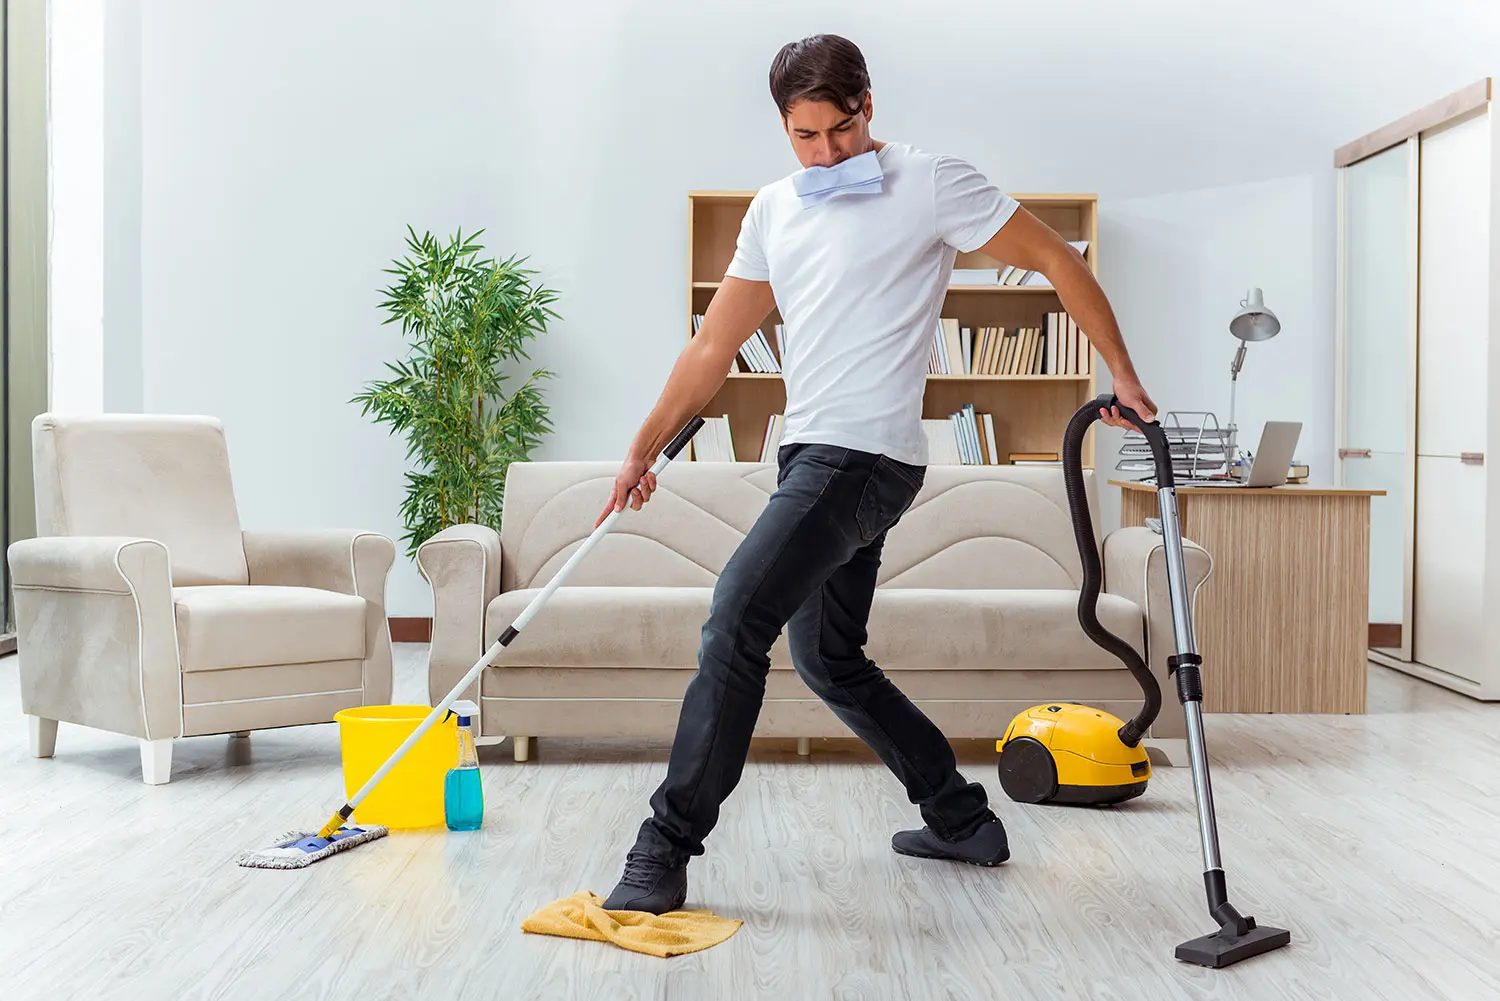 Man vacuuming the floor image.